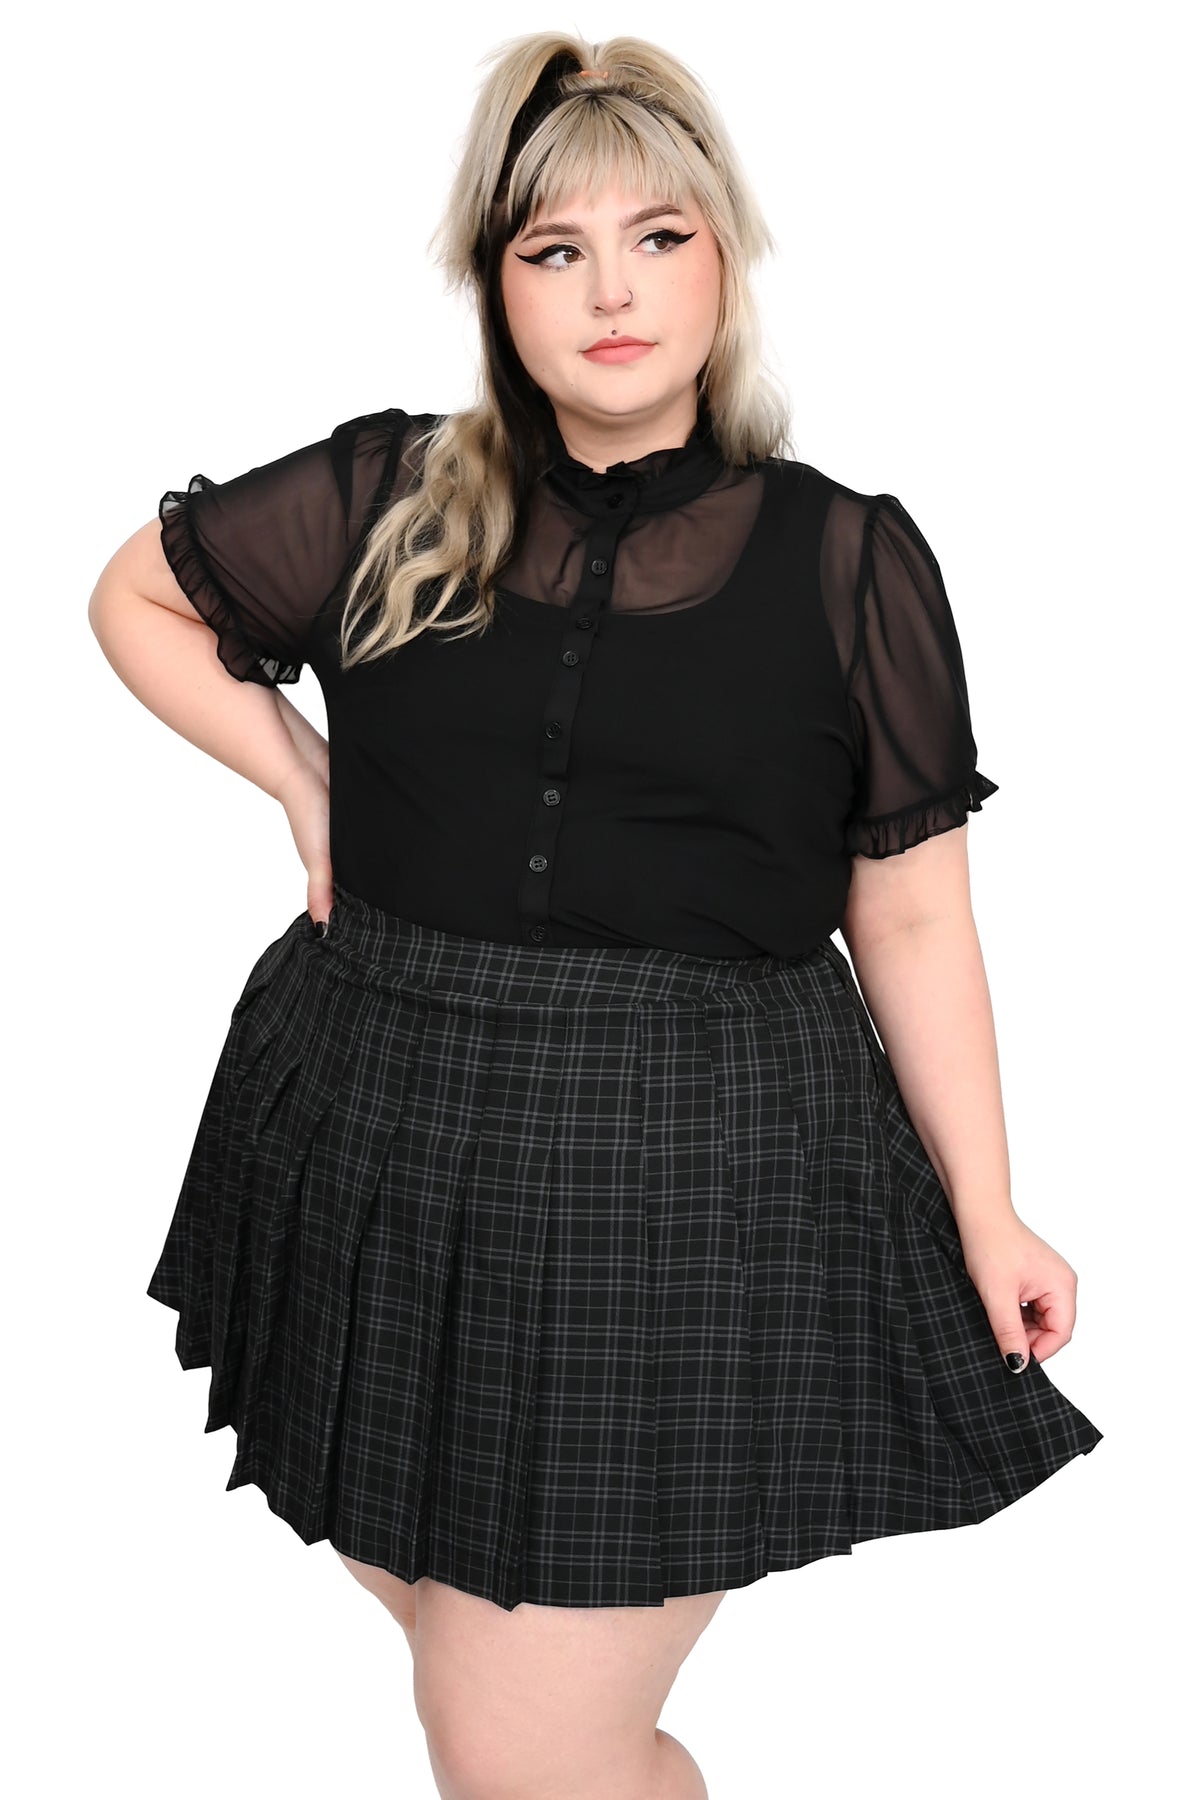 Dark Academy Pleated Skirt with Shorts - Size Medium left! No Restock!